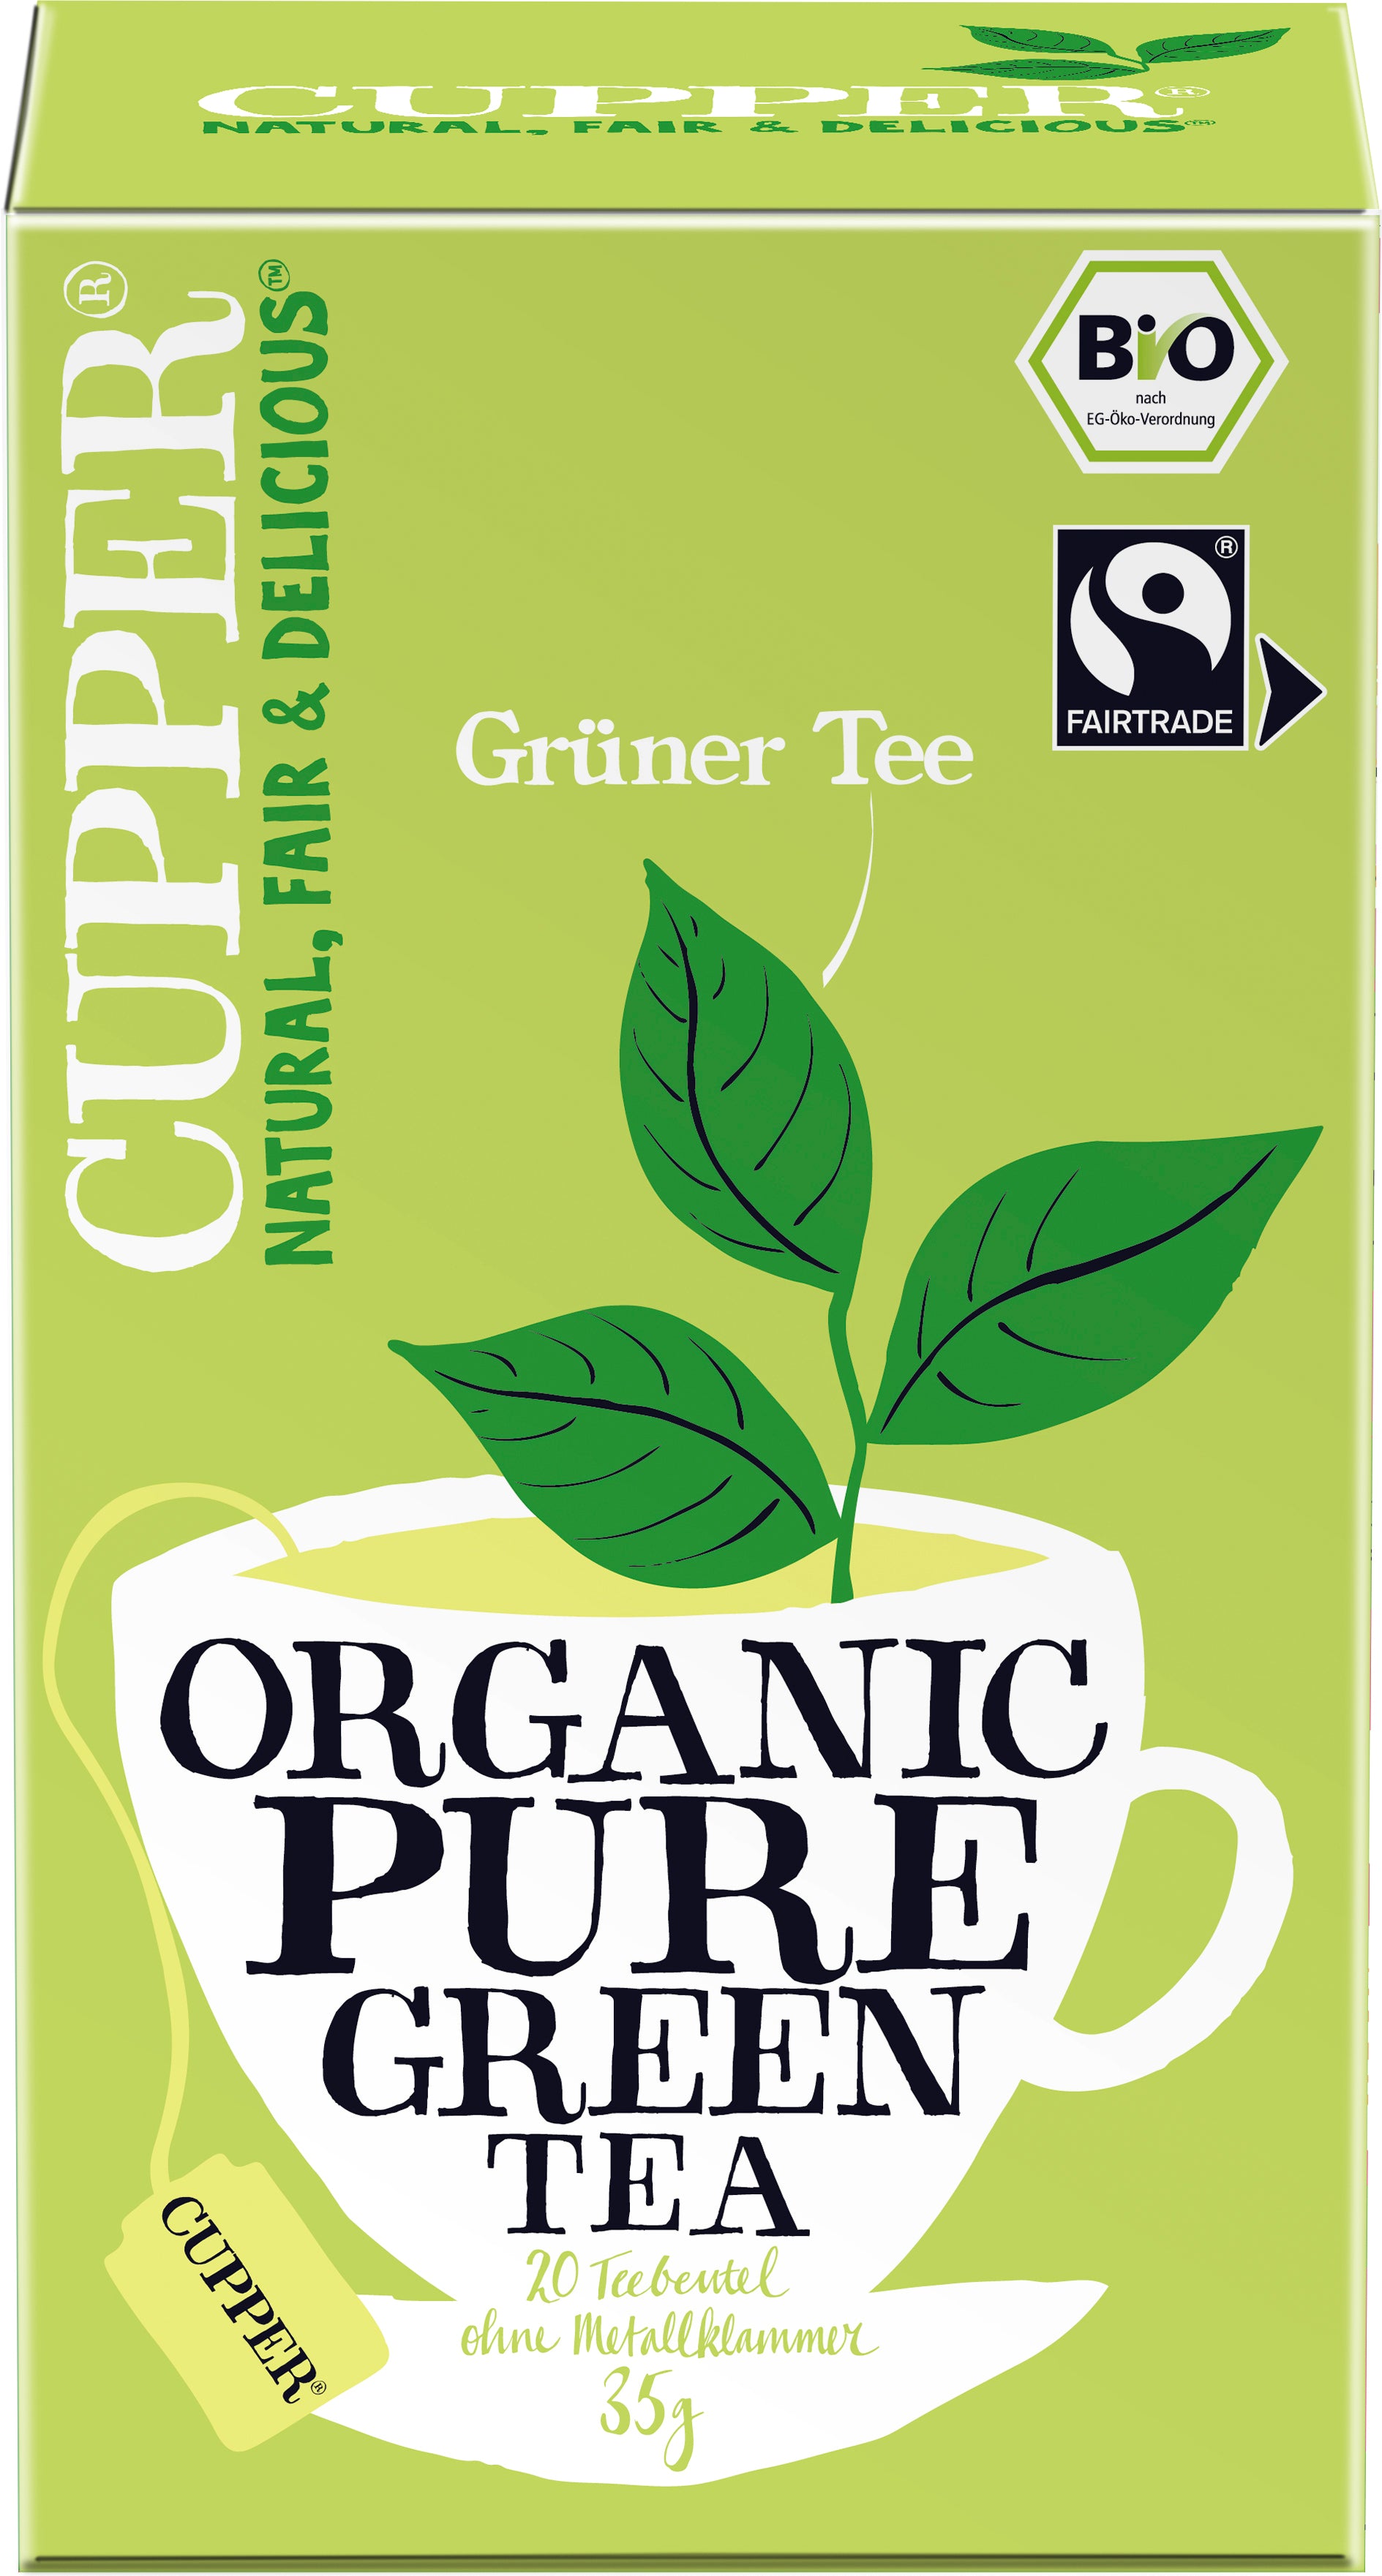 Cupper Tiszta Zöld bio & fairtrade tea 20filter